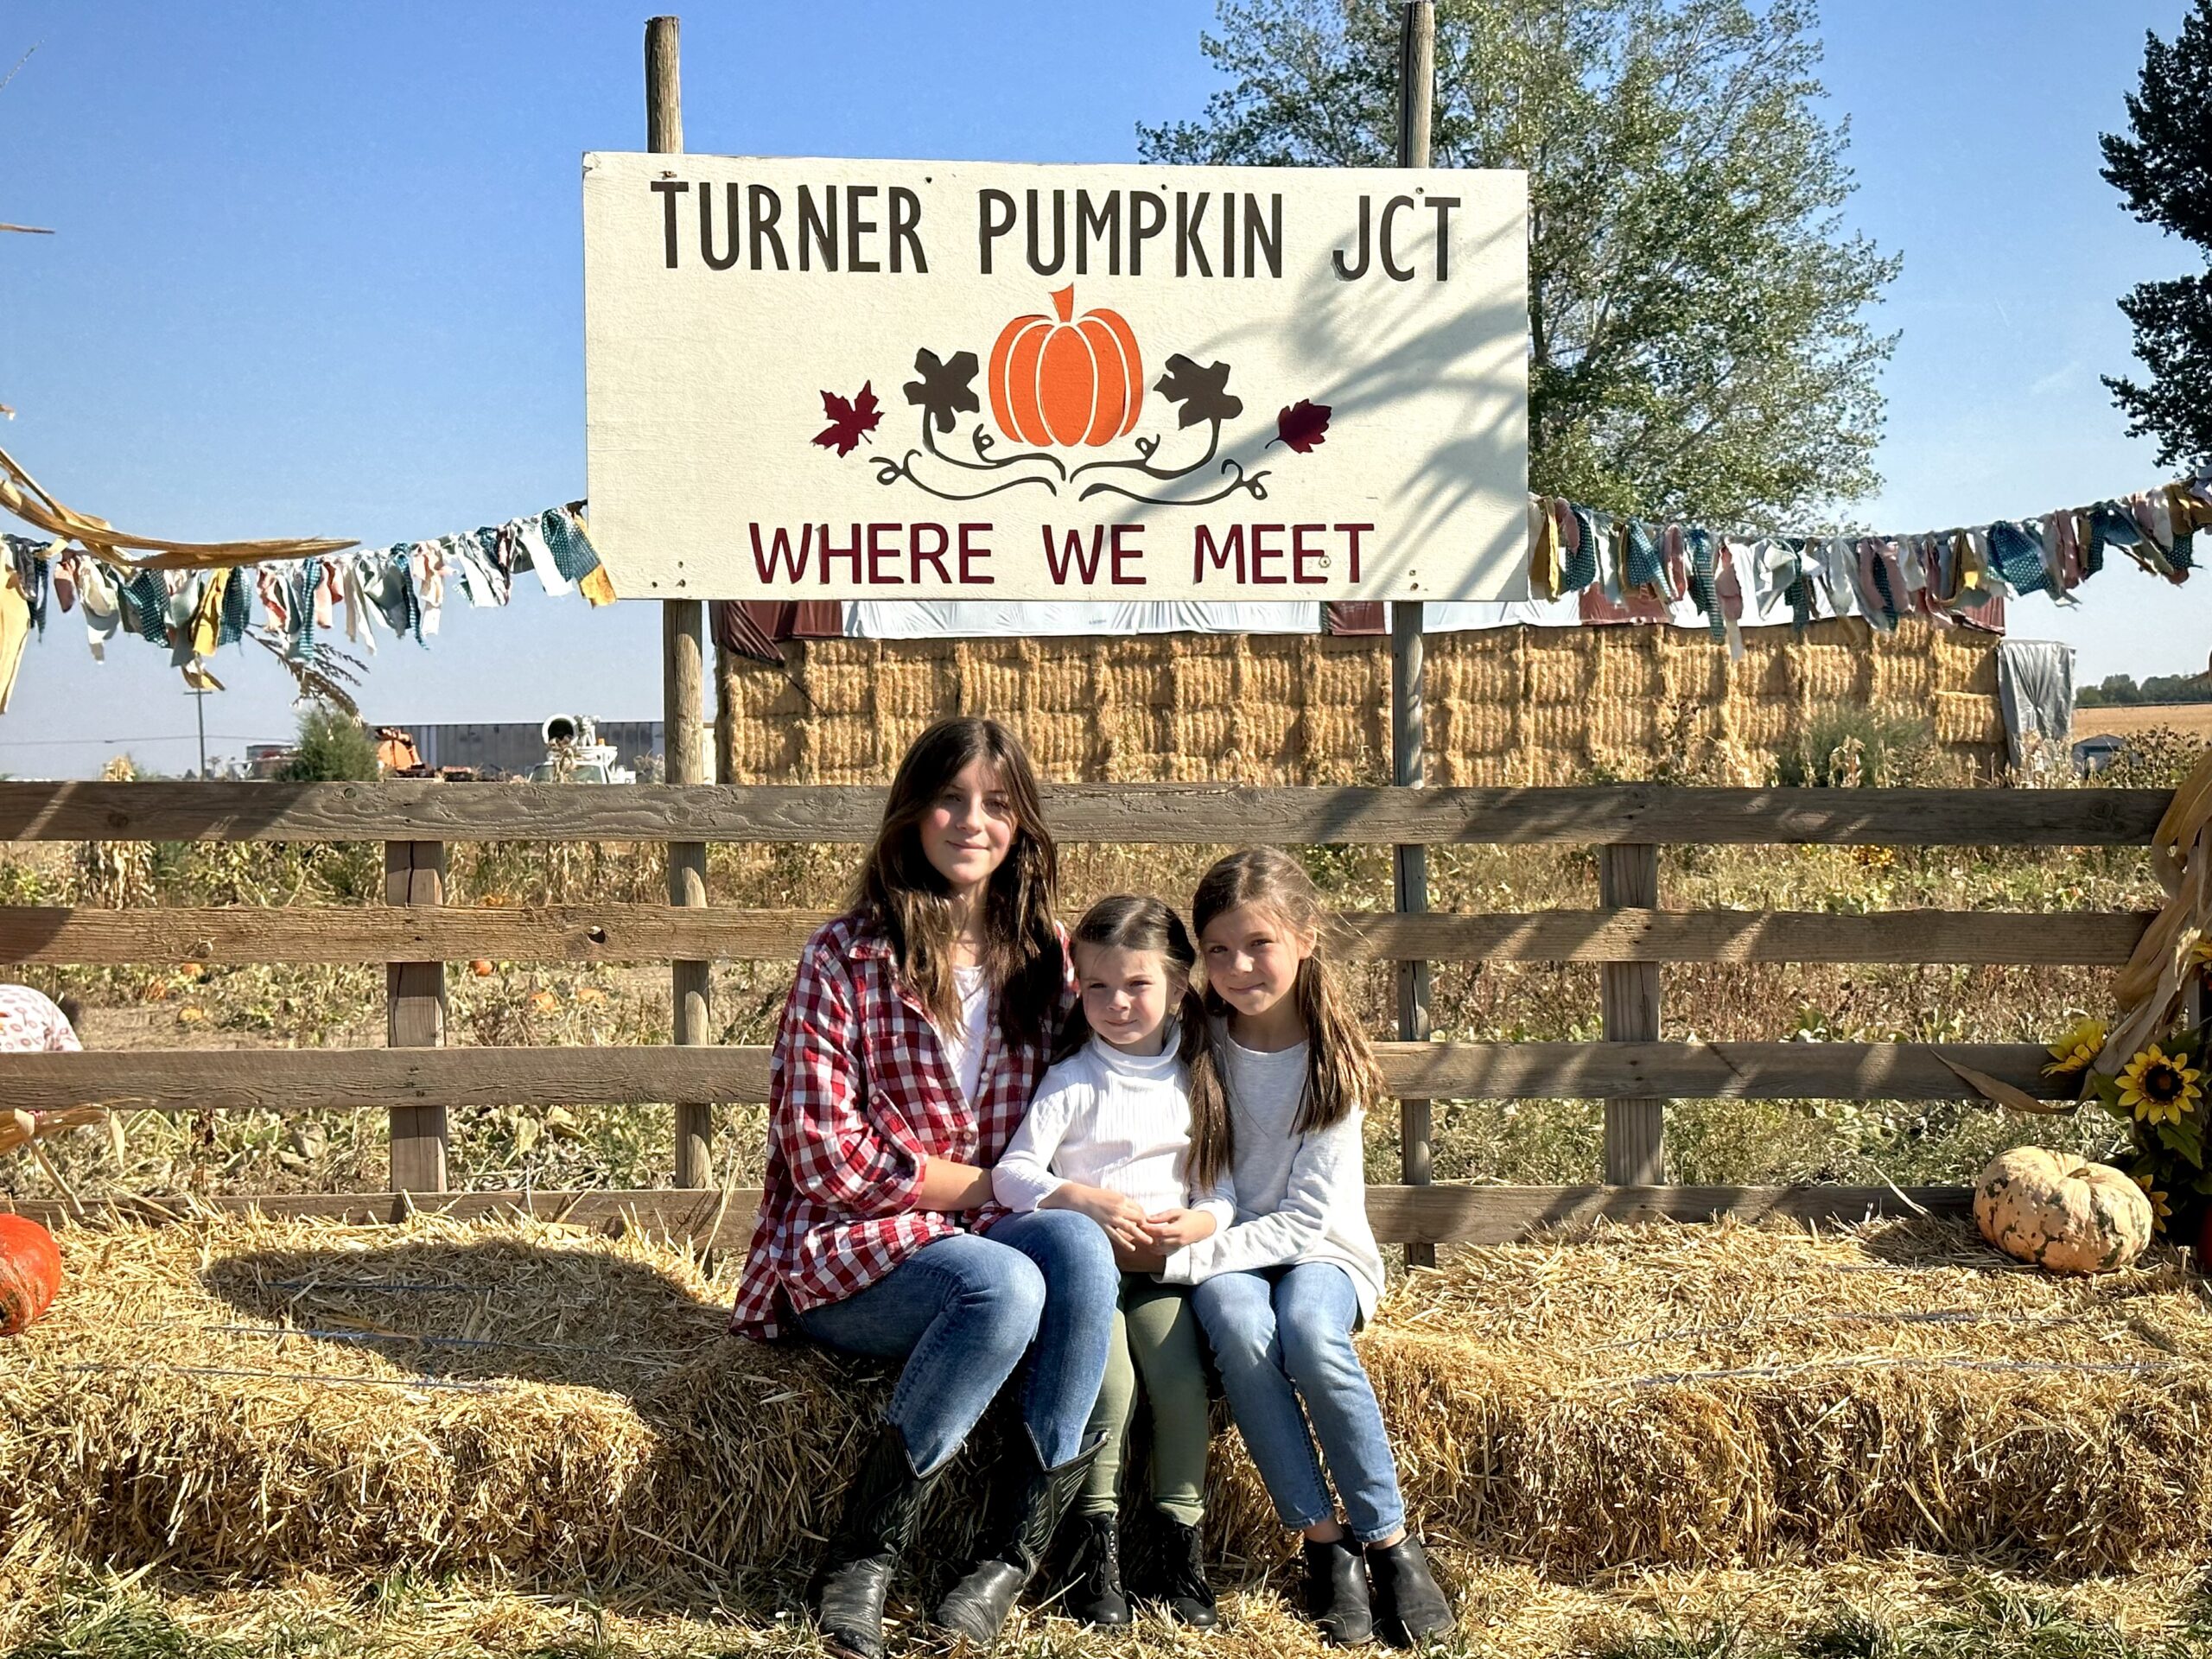 Turner pumpkin junction -101